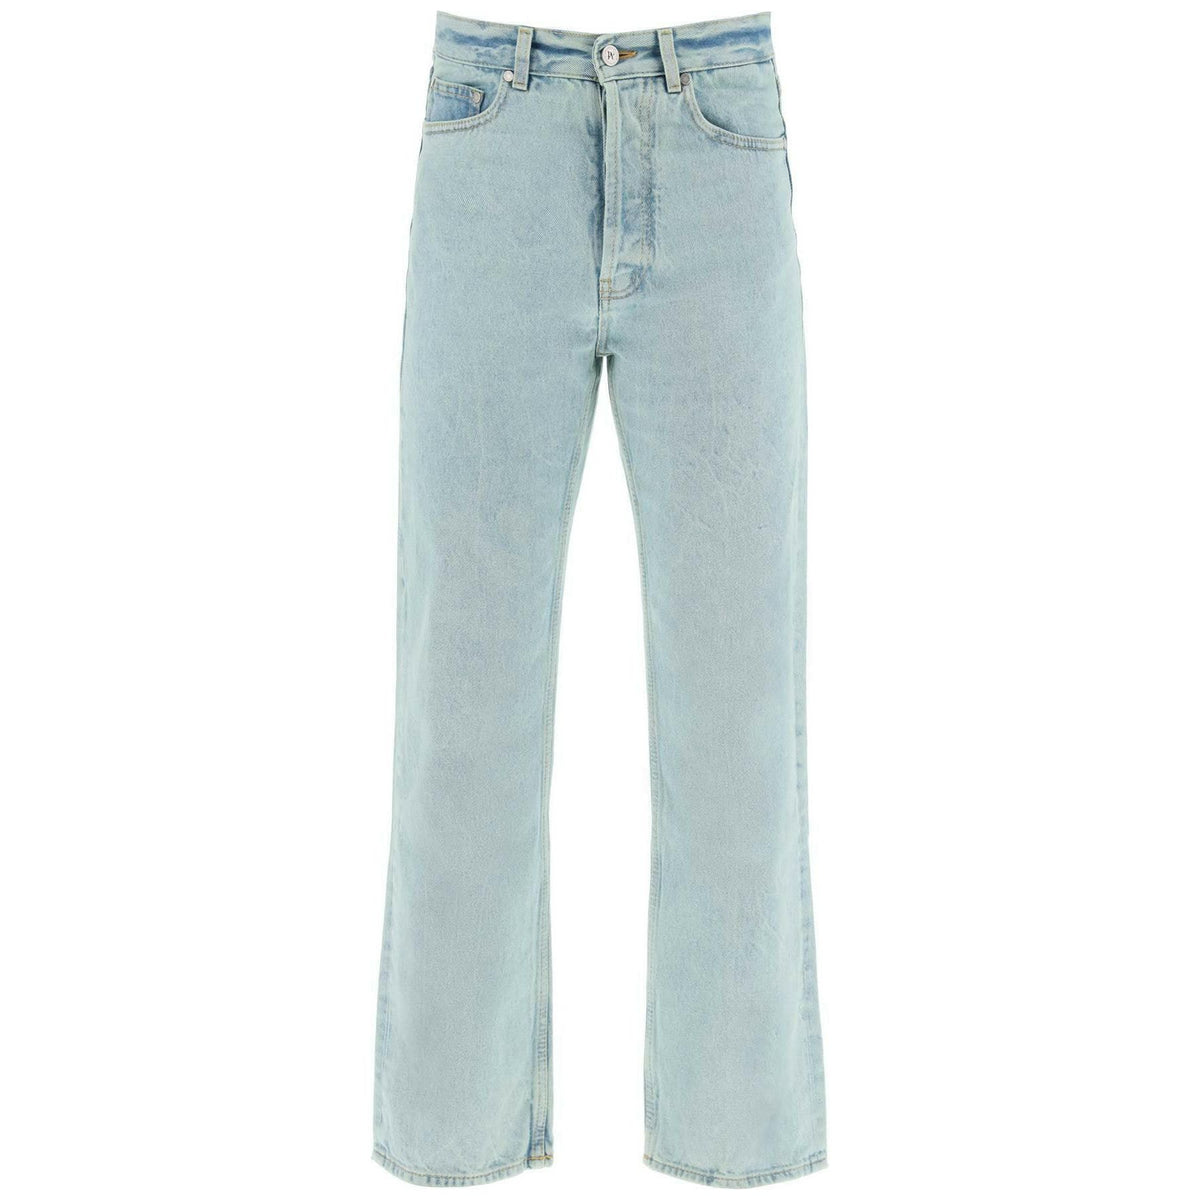 PALM ANGELS - Mint Off-White Denim Garment-Dyed Cotton Jeans - JOHN JULIA